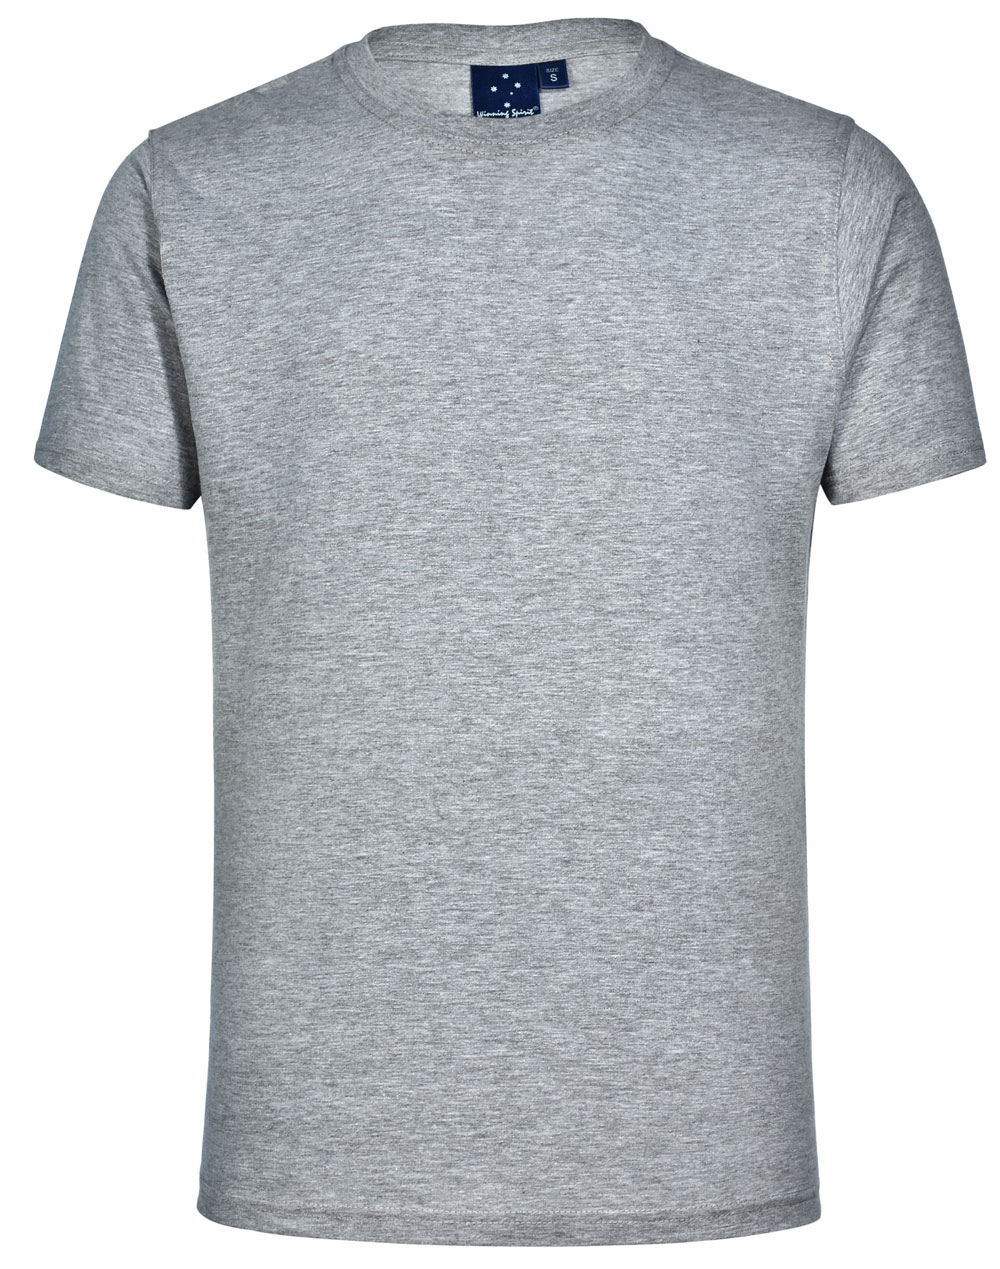 Custom Made (Grey) Budget Unisex Crew Neck T-Shirts Mens Online Perth Australia